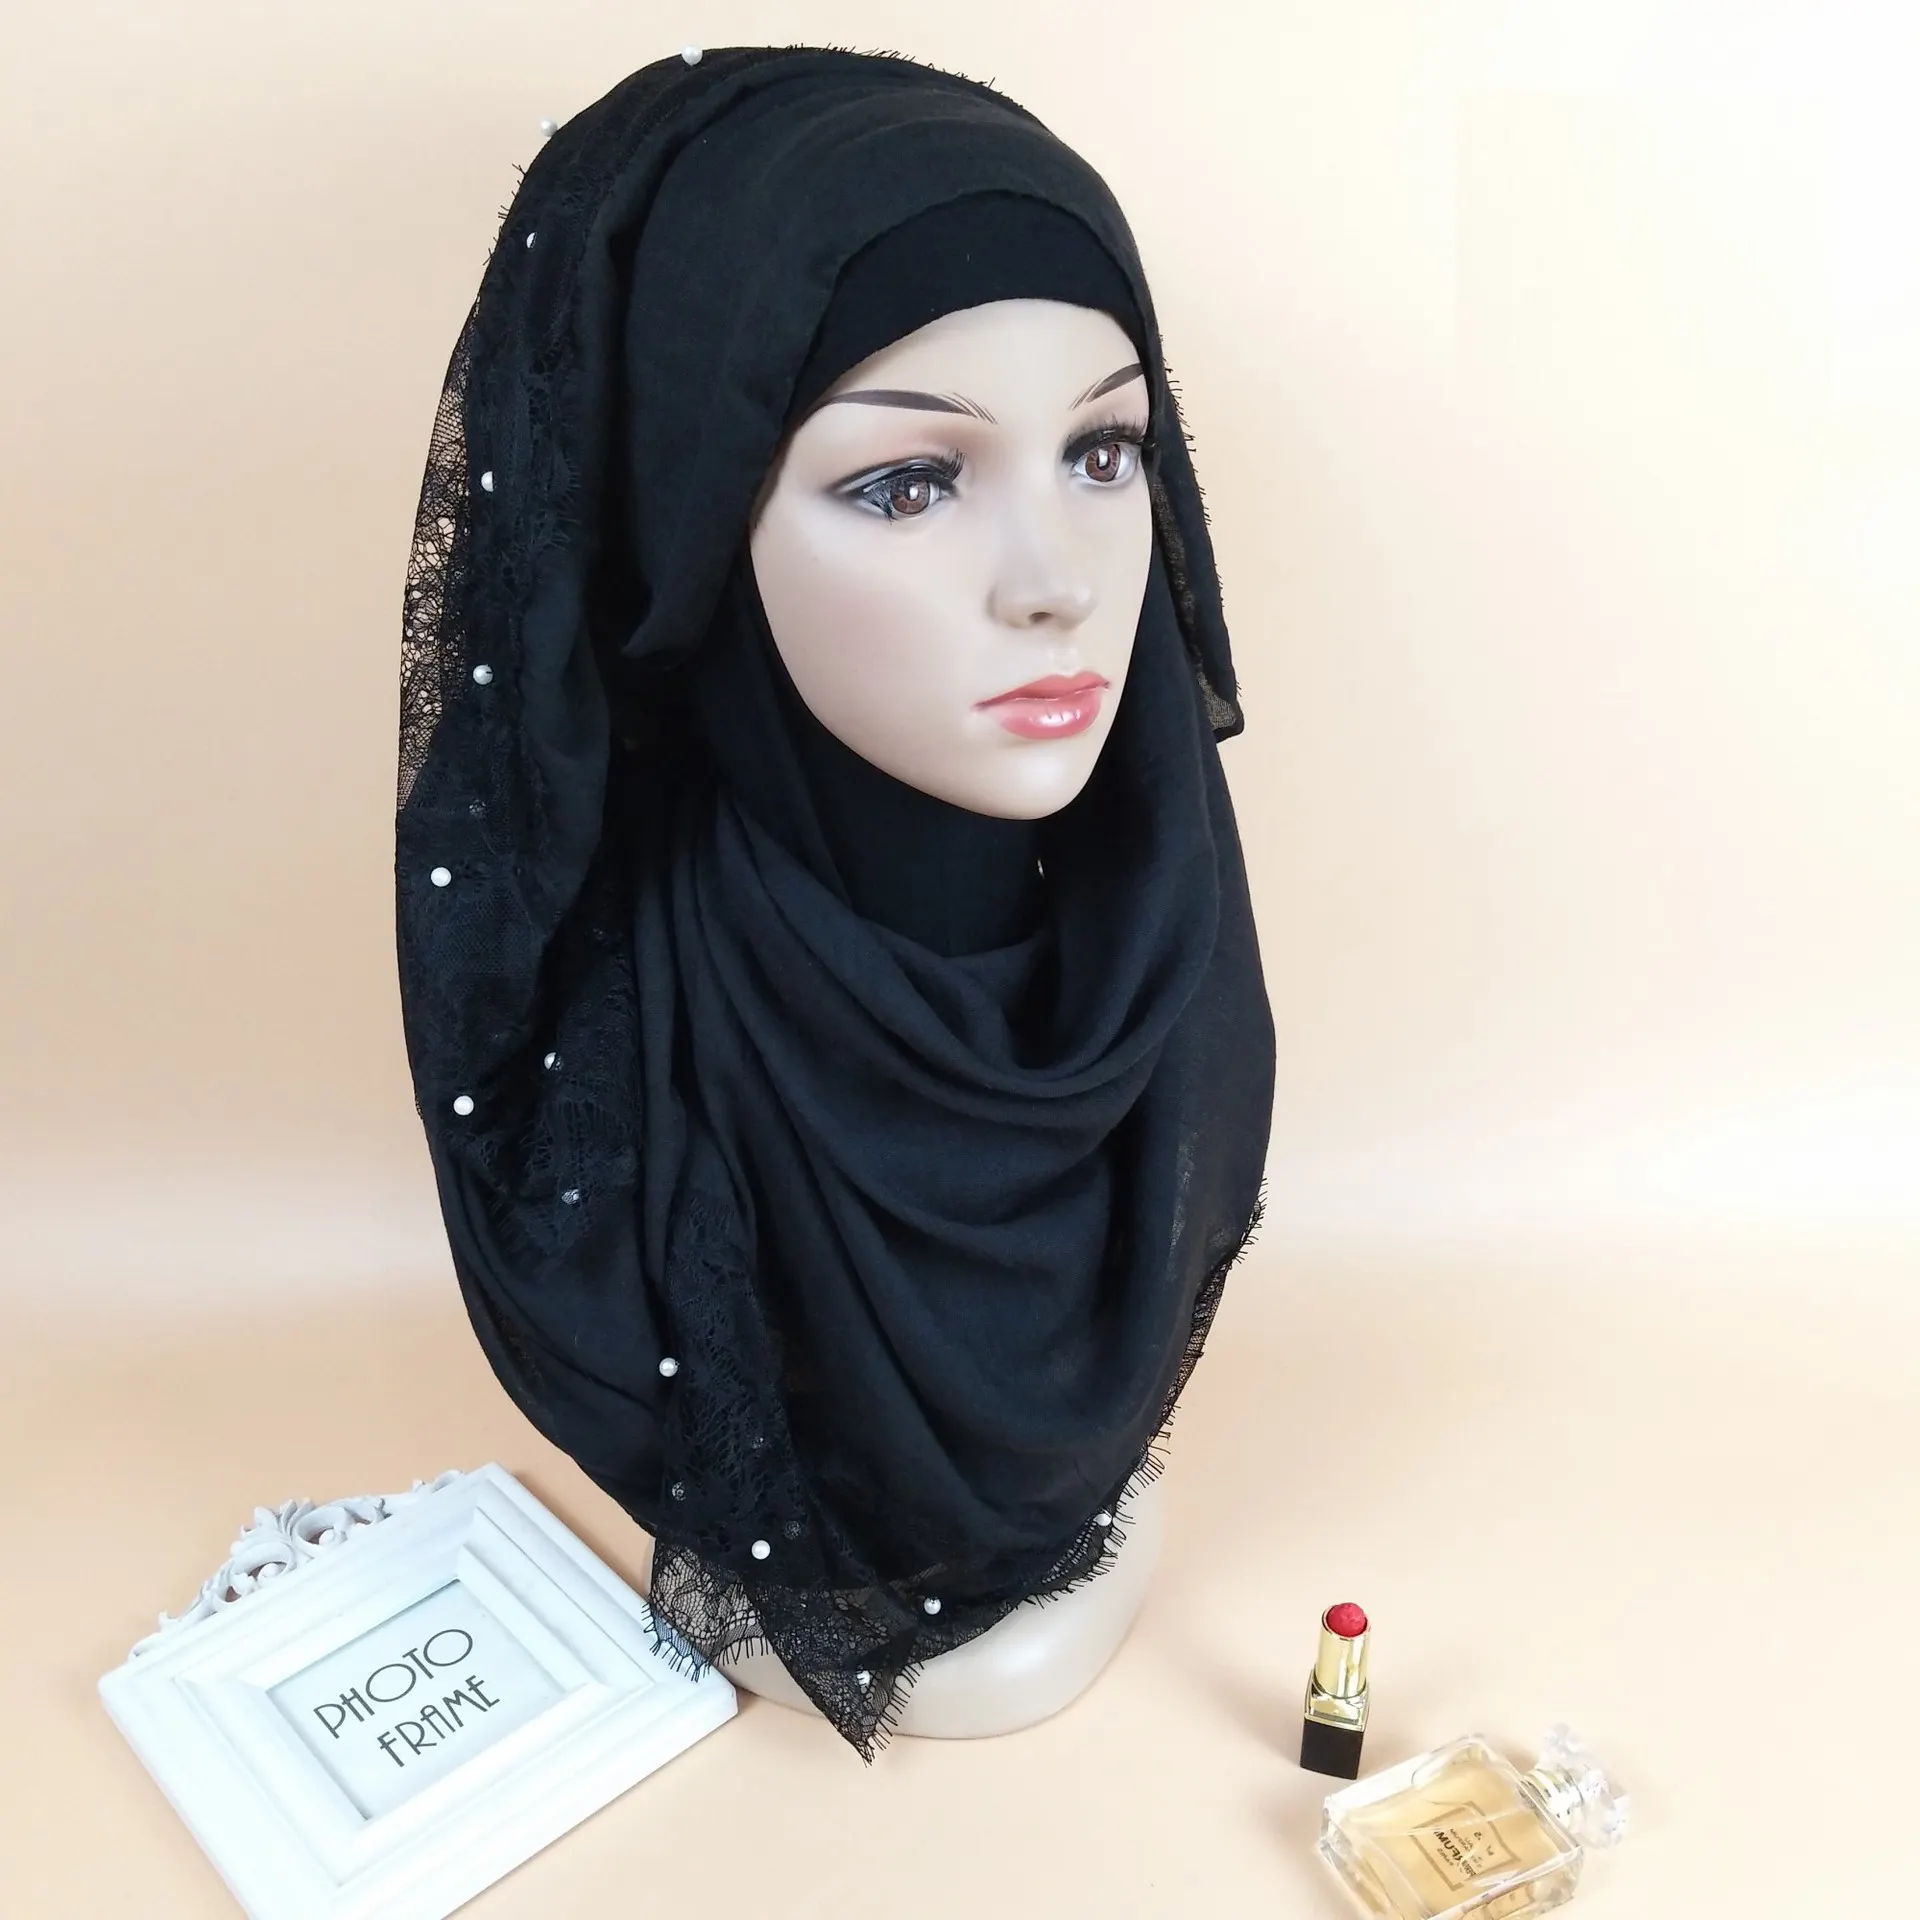 Low MOQ stock fashion hijab designs